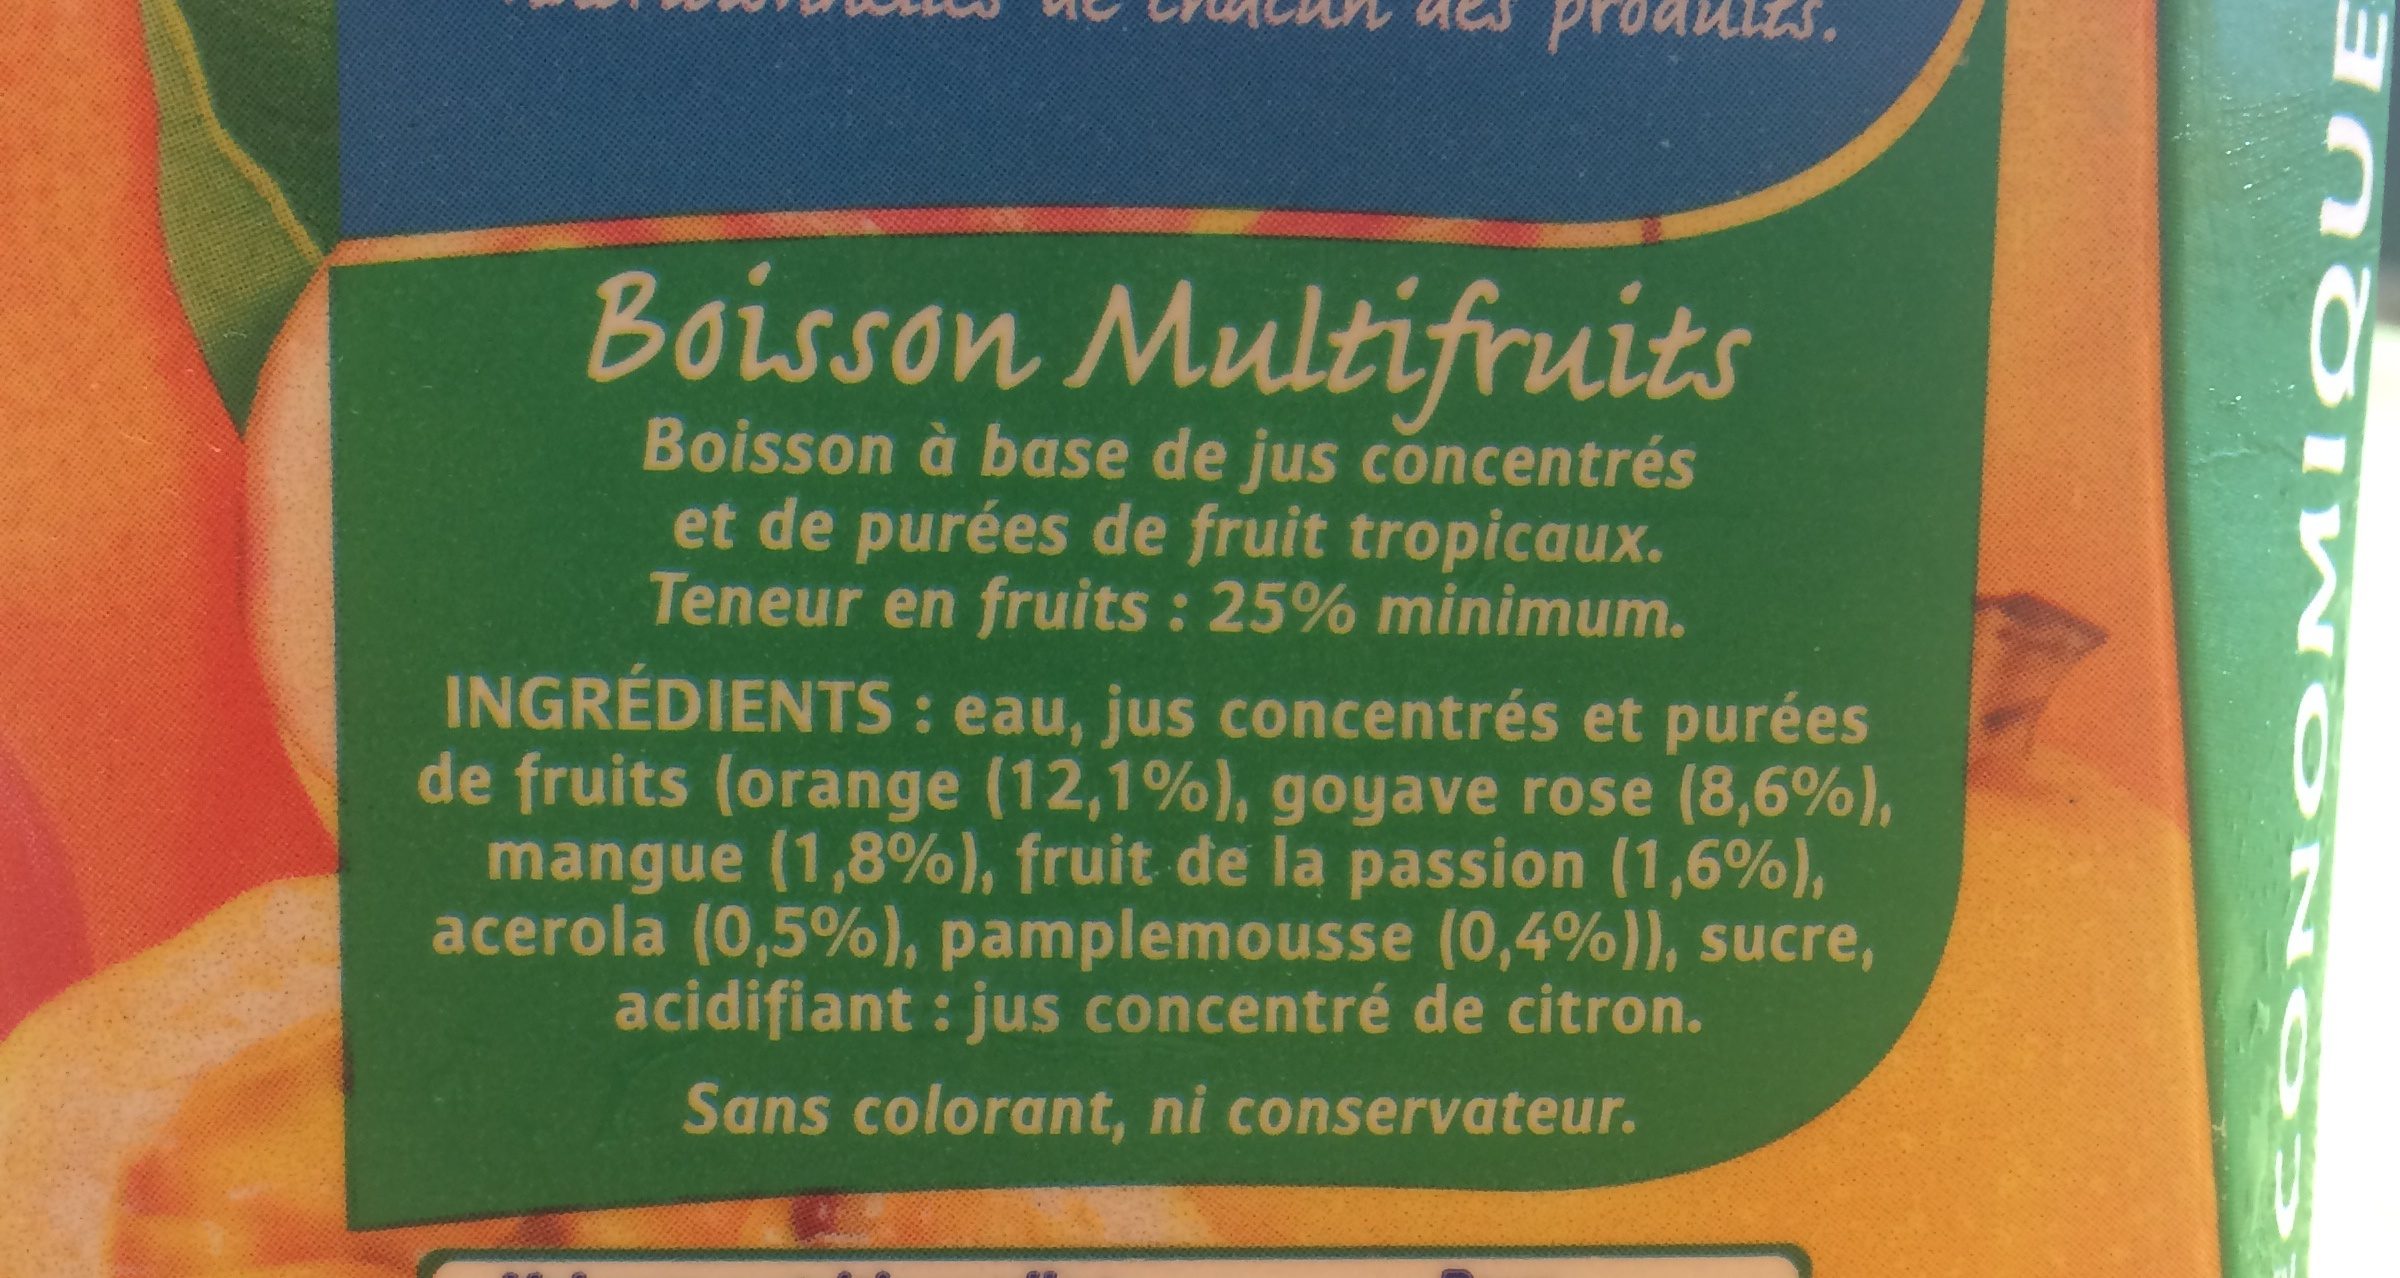 Boisson multifruits - Ingredients - fr